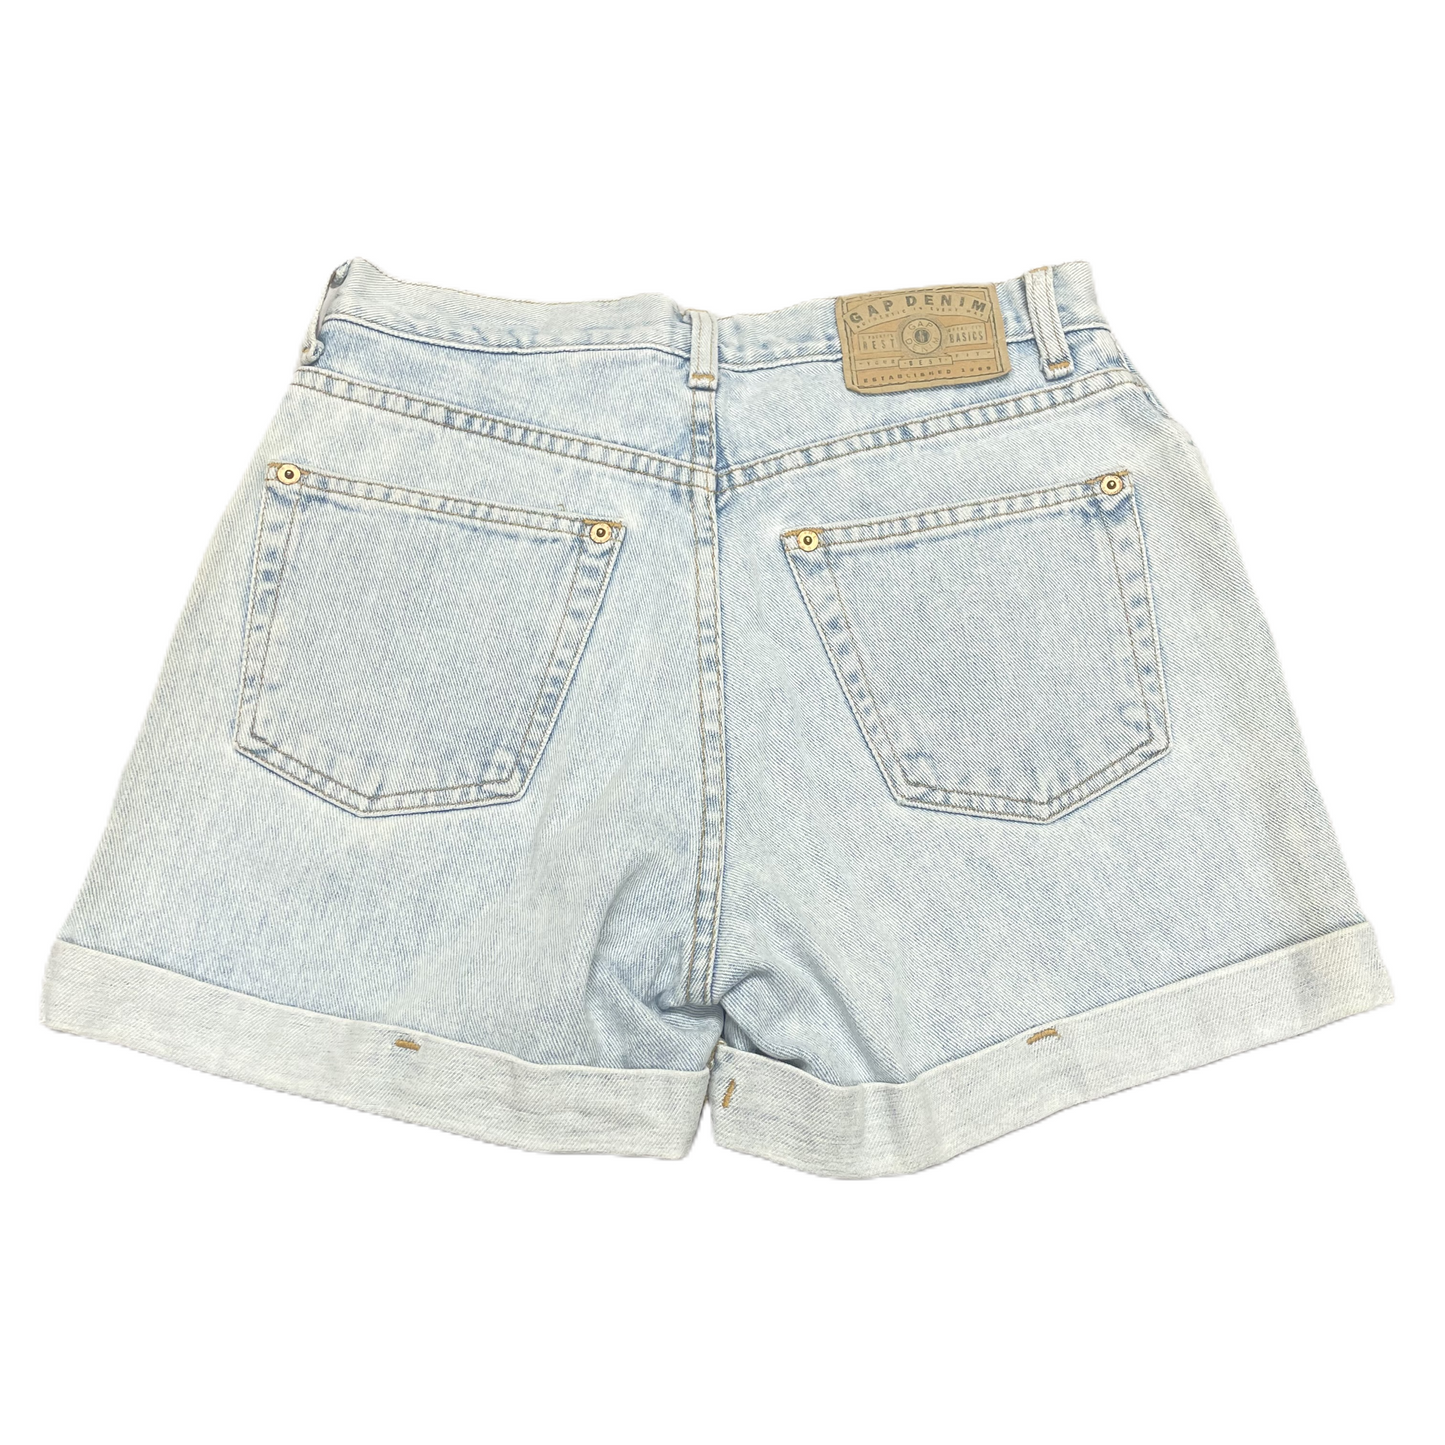 Blue Denim Shorts By Gap, Size: 6